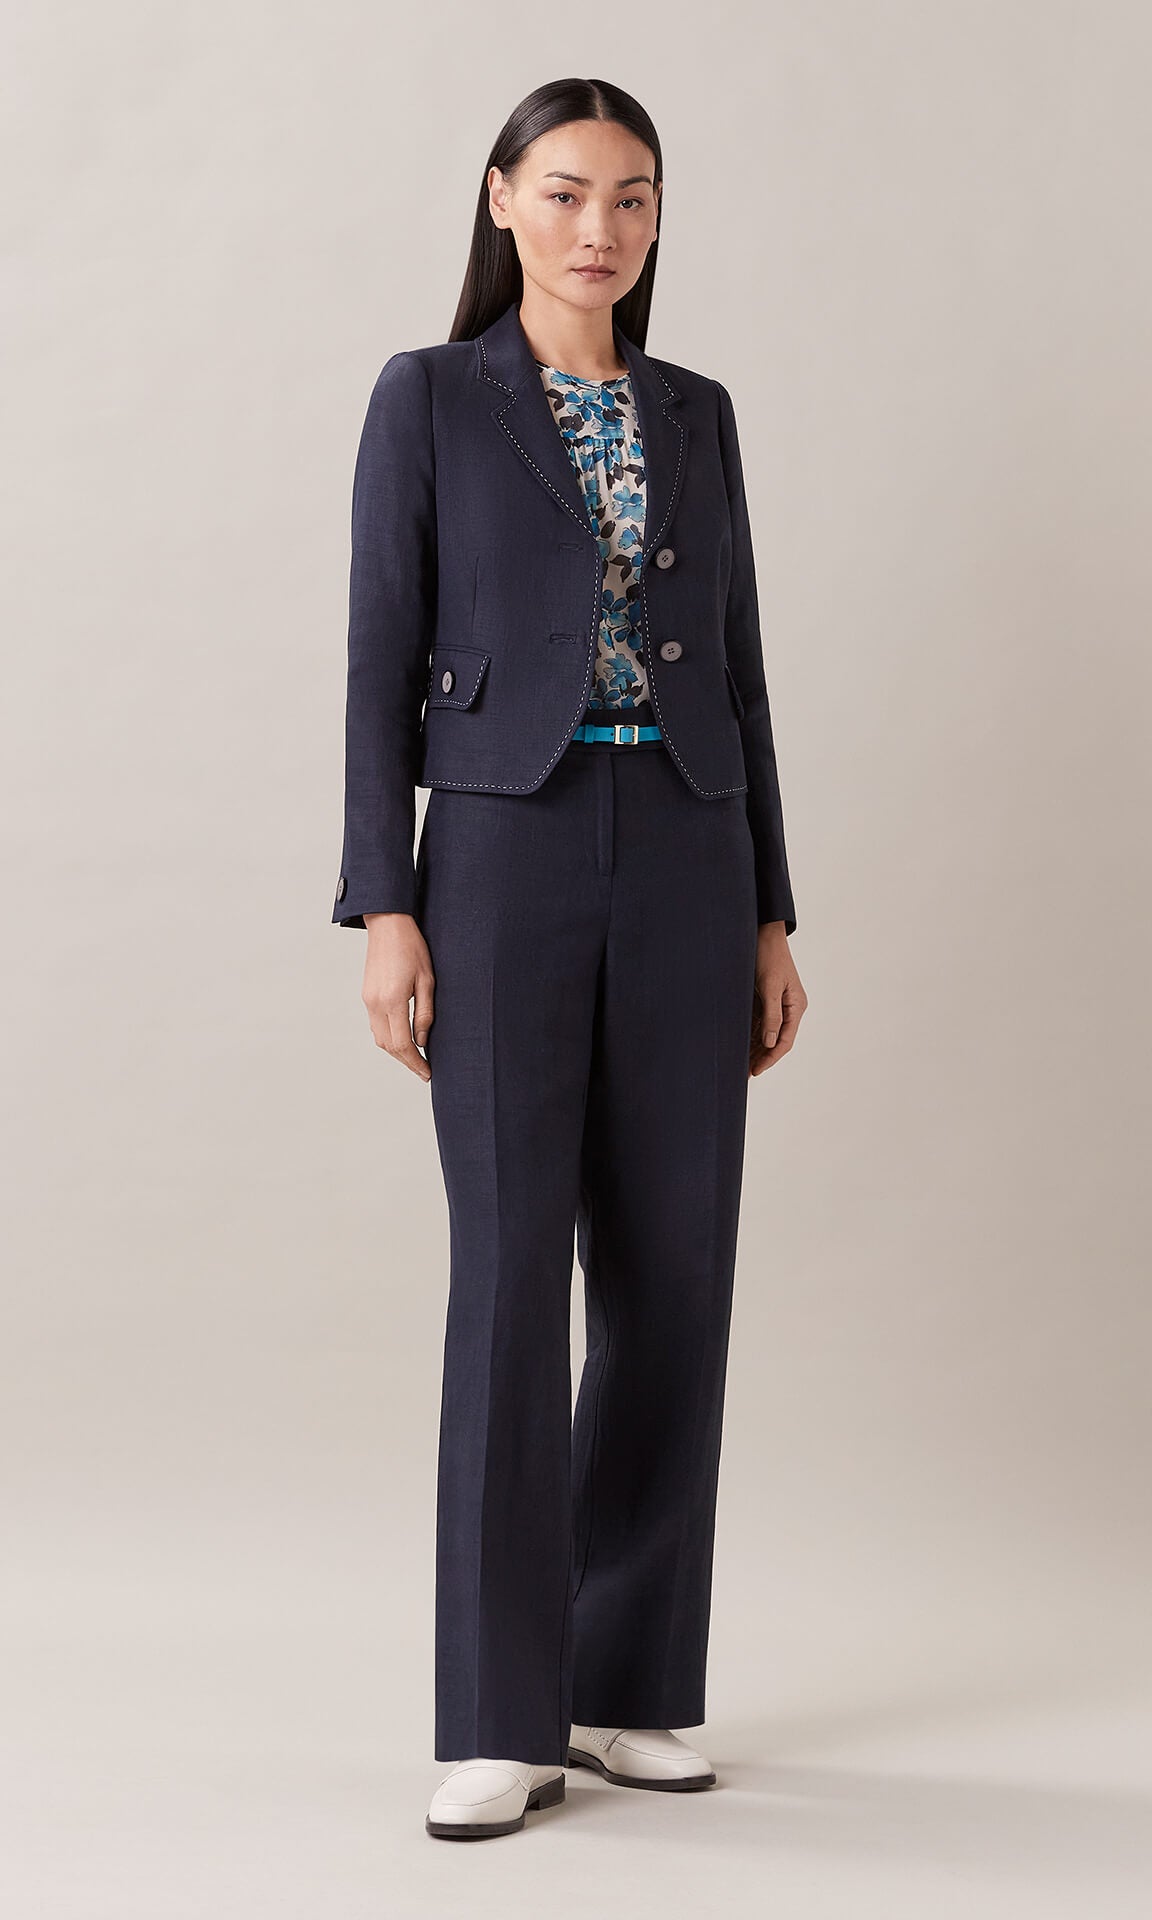 Women Suit Jackets Work Office Slim Ladies Top Blazer Short Design Long  Sleeve Feminino Wine Red Navy Blue Gray 211122 From Long01, $16.06 |  DHgate.Com